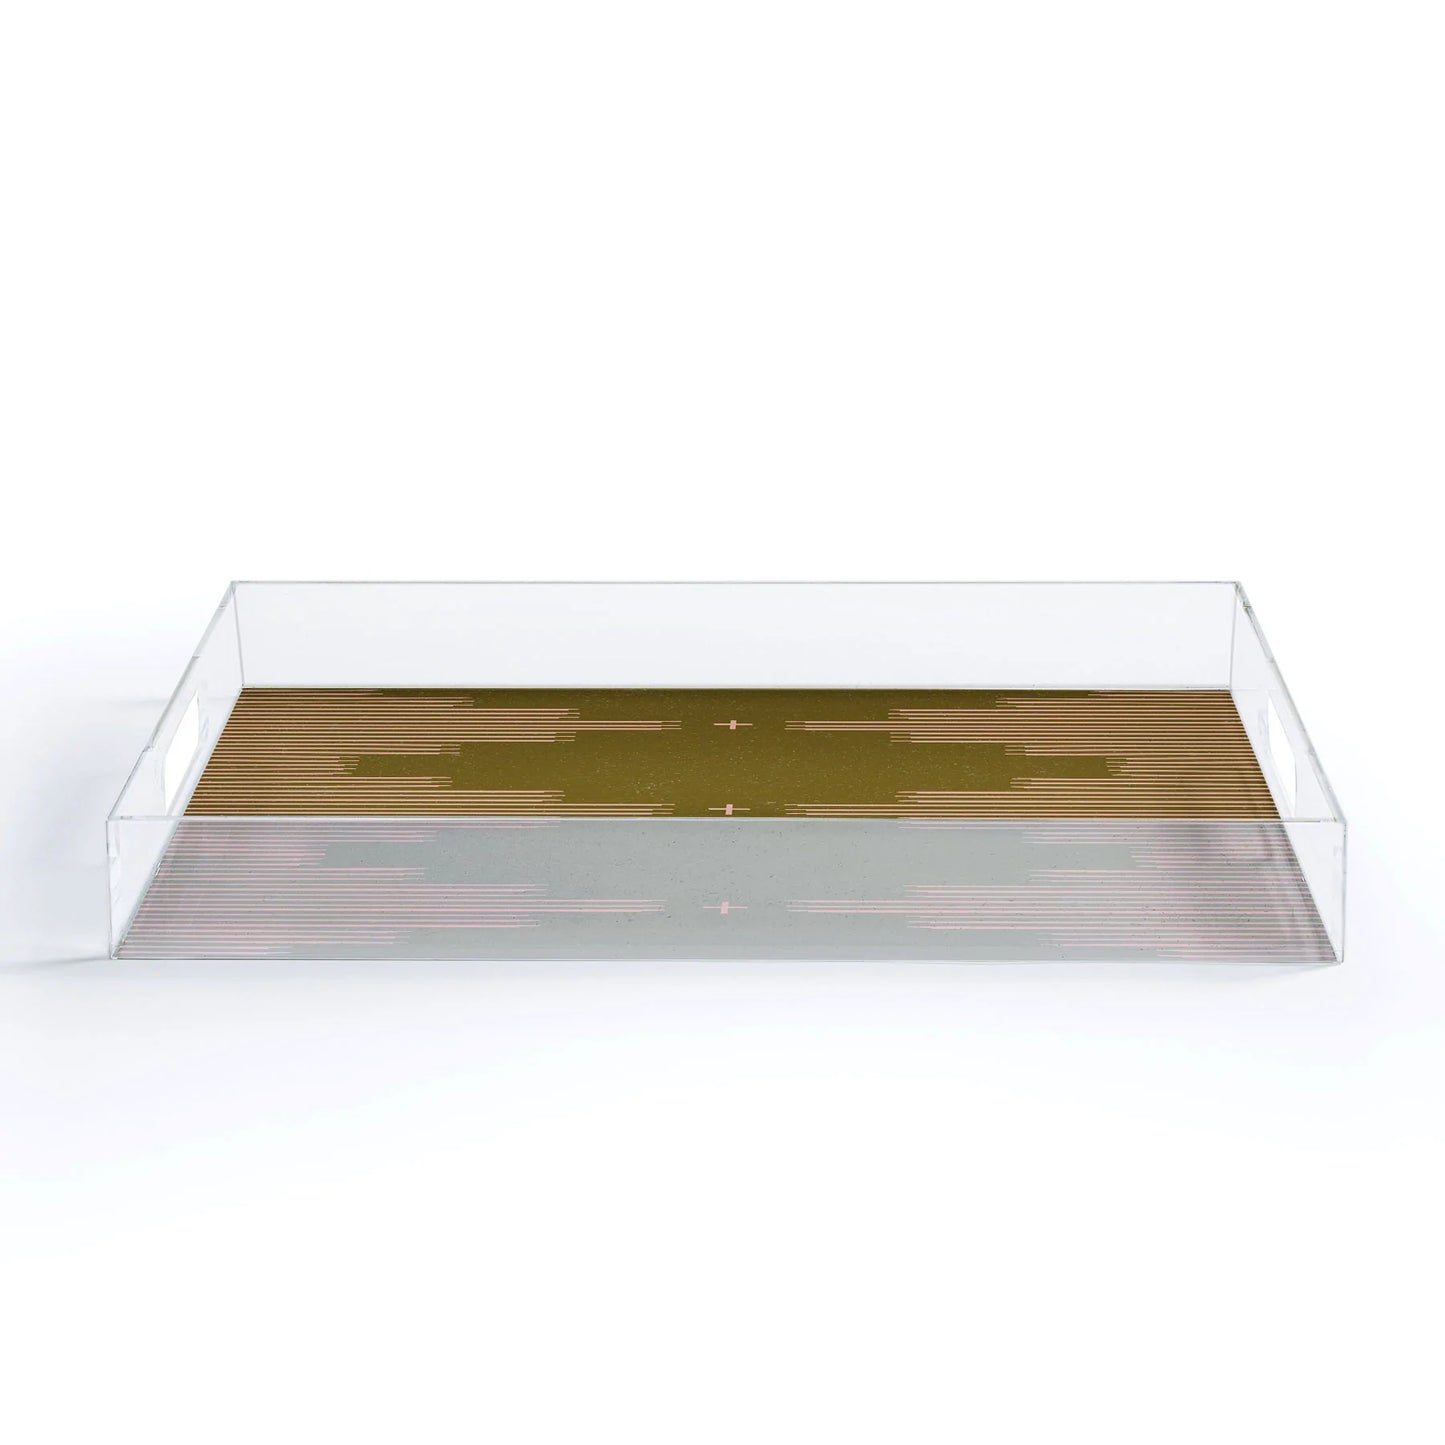 Southwest Minimalist Retro Acrylic Tray - Medium w/Handles